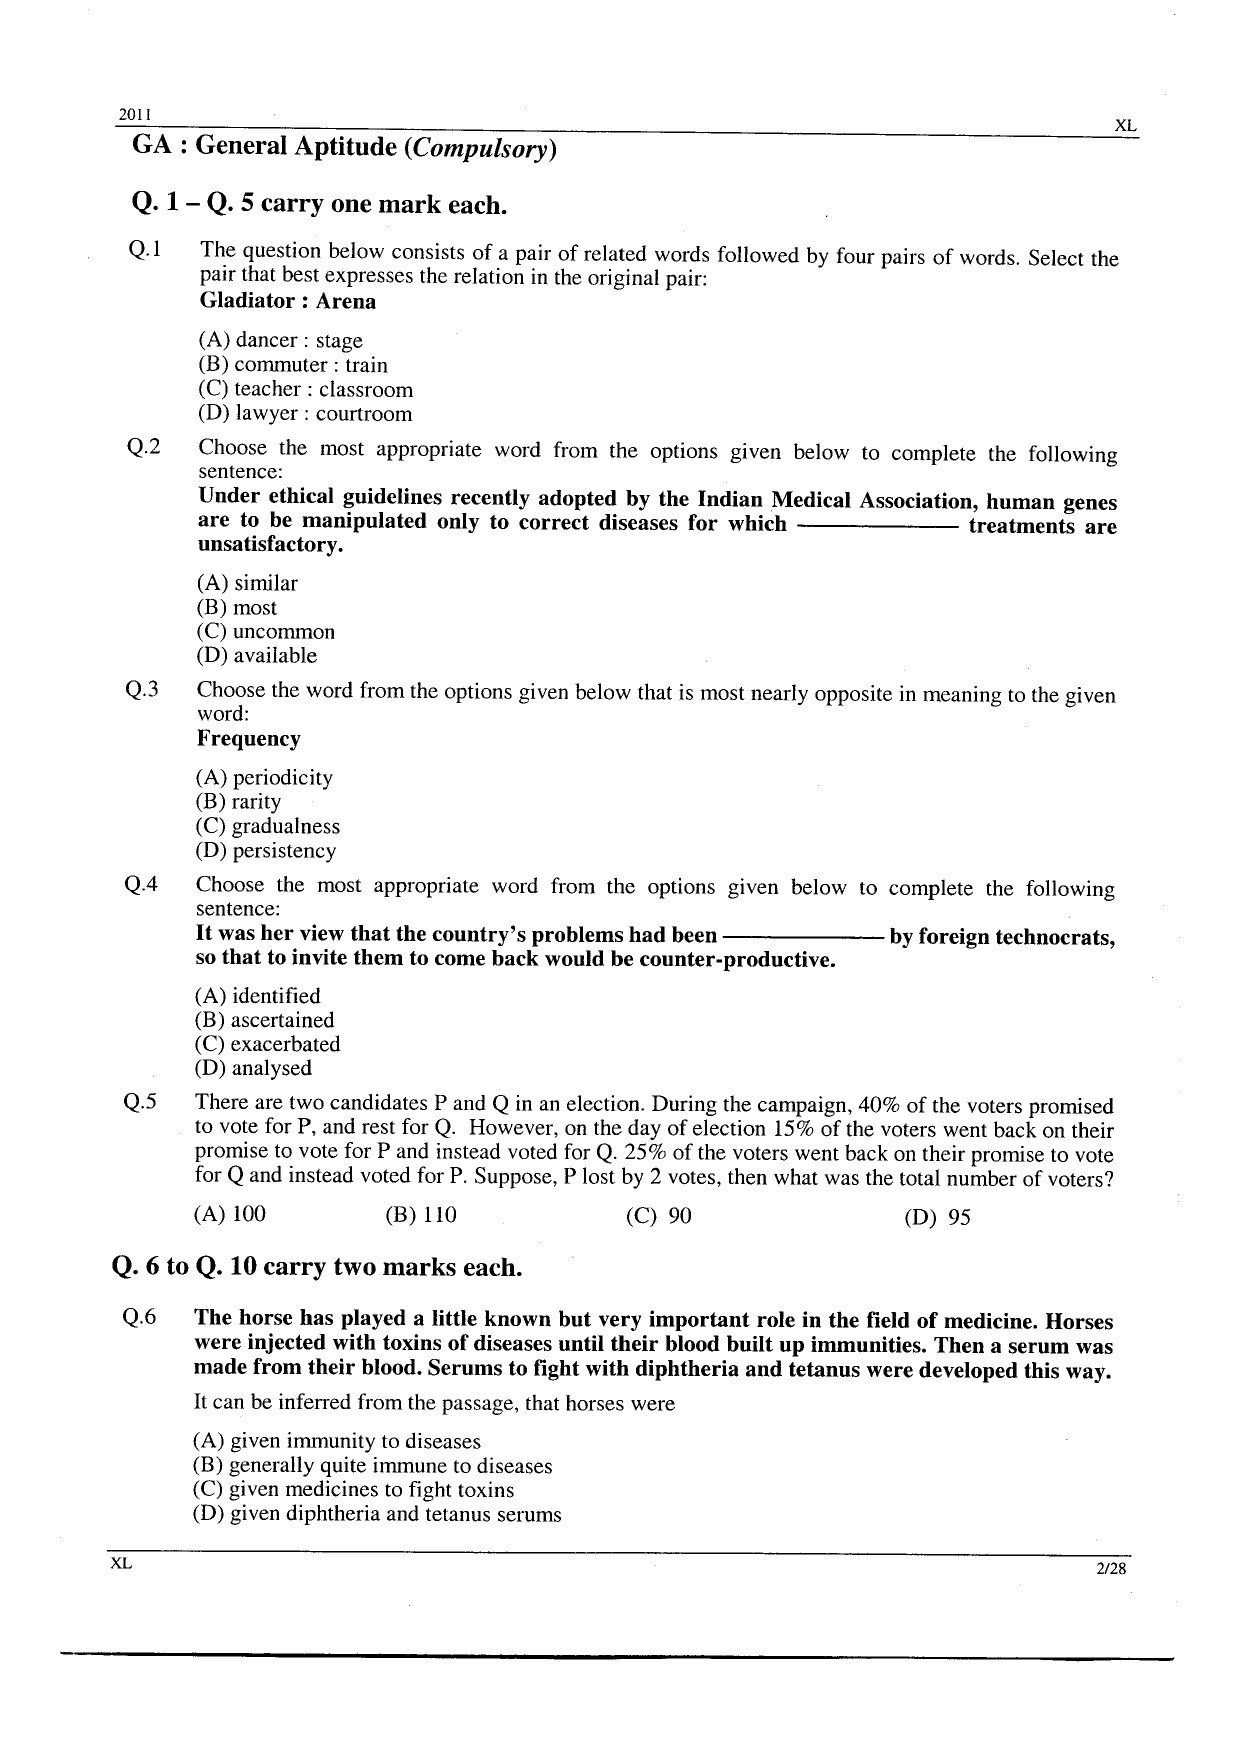 GATE Exam Question Paper 2011 Life Sciences 2